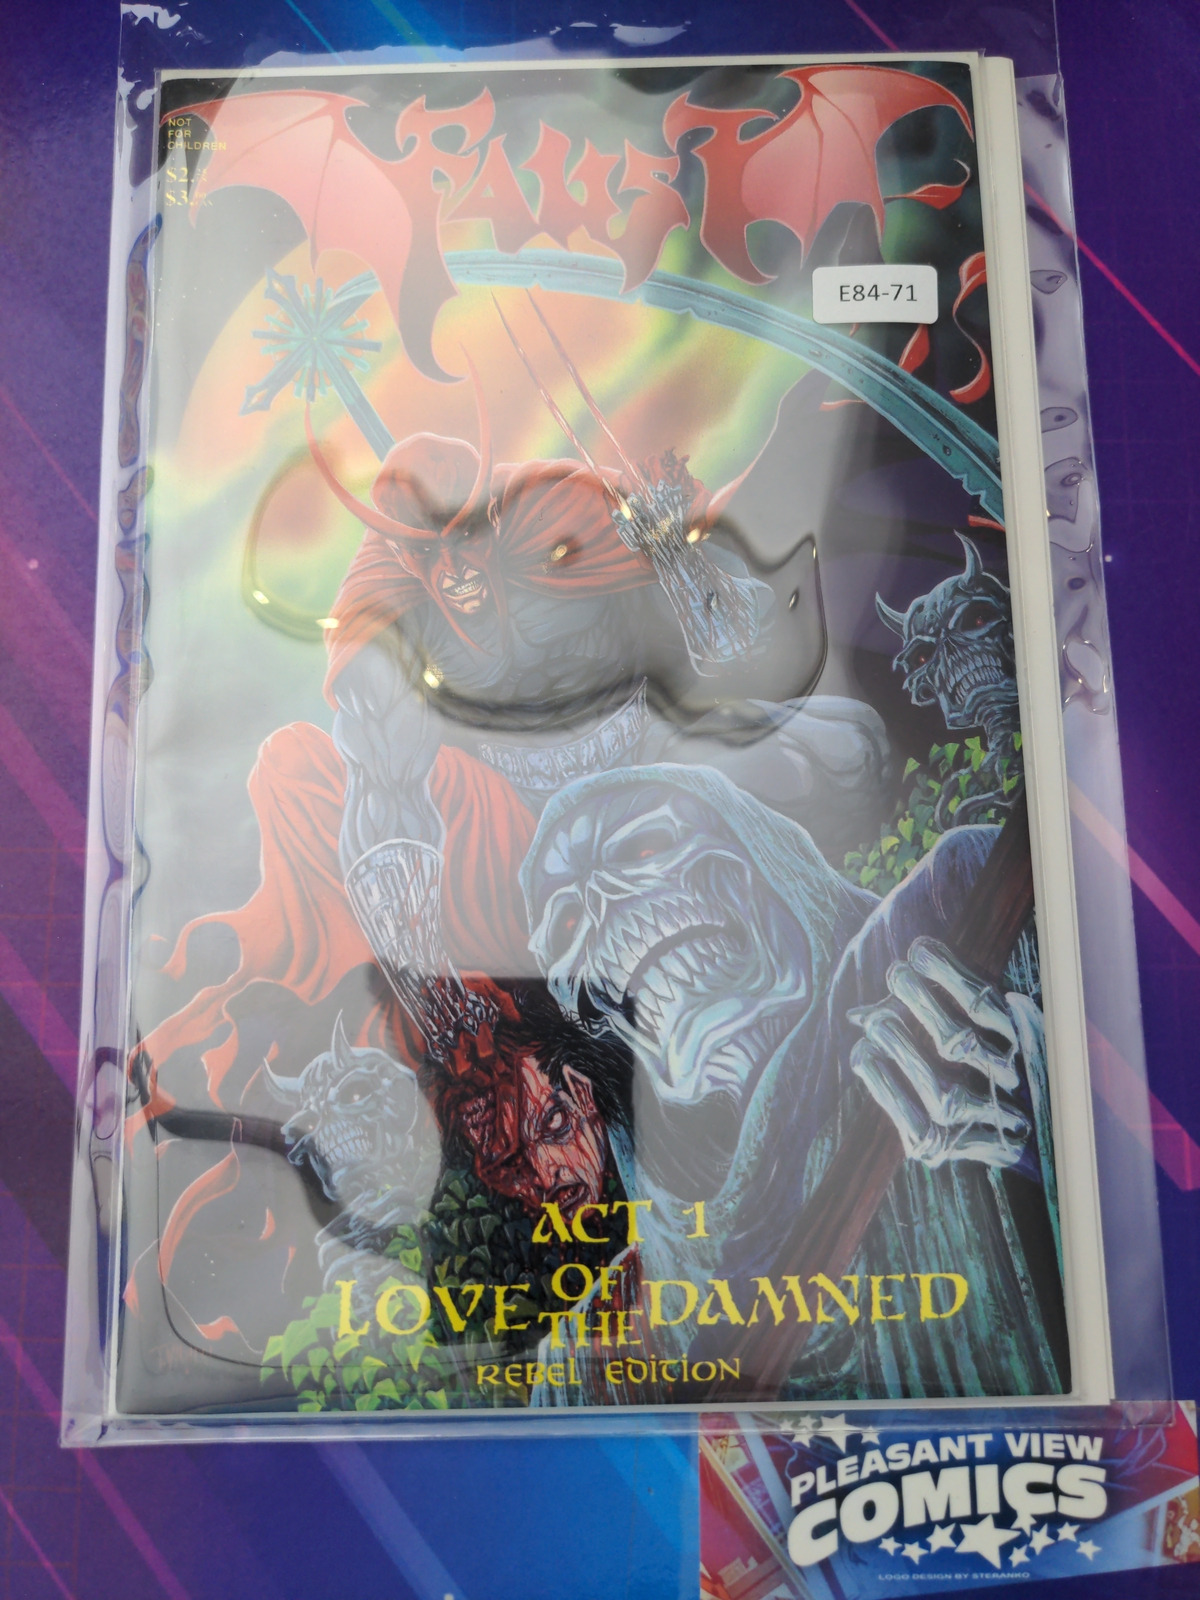 FAUST: LOVE OF THE DAMNED #1 HIGH GRADE REBEL STUDIOS COMIC BOOK E84-71